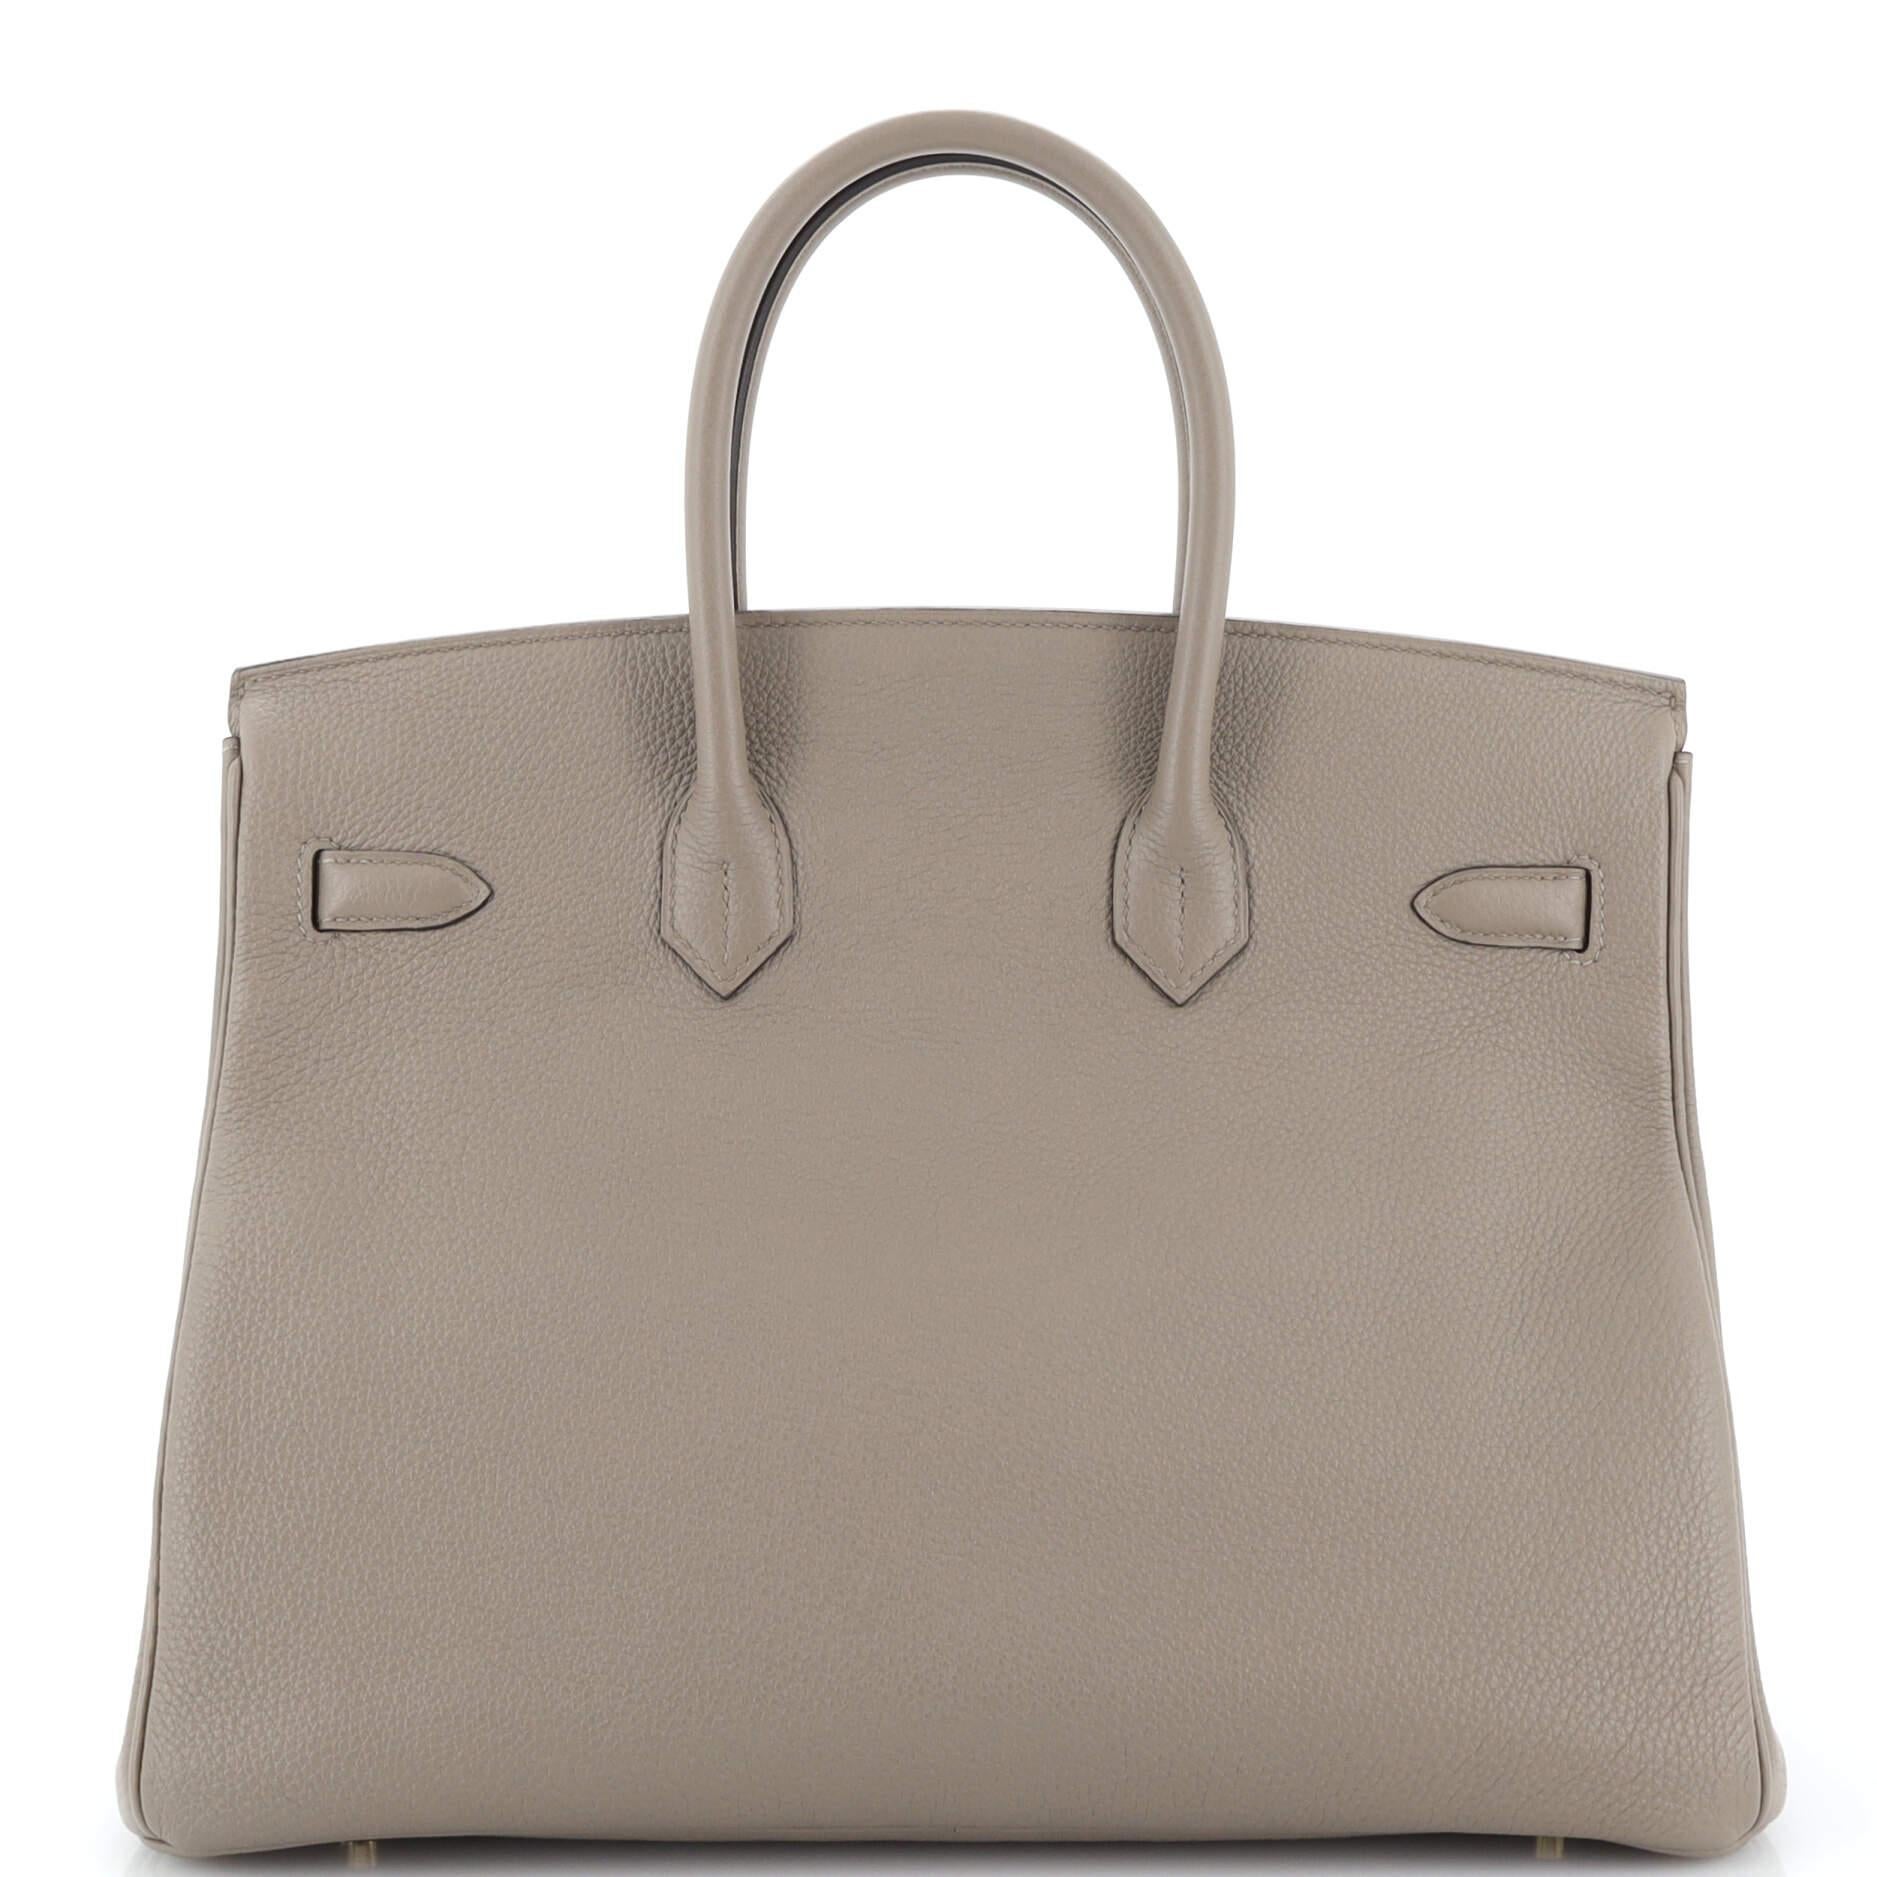 Women's Hermes Birkin Handbag Grey Togo with Gold Hardware 35